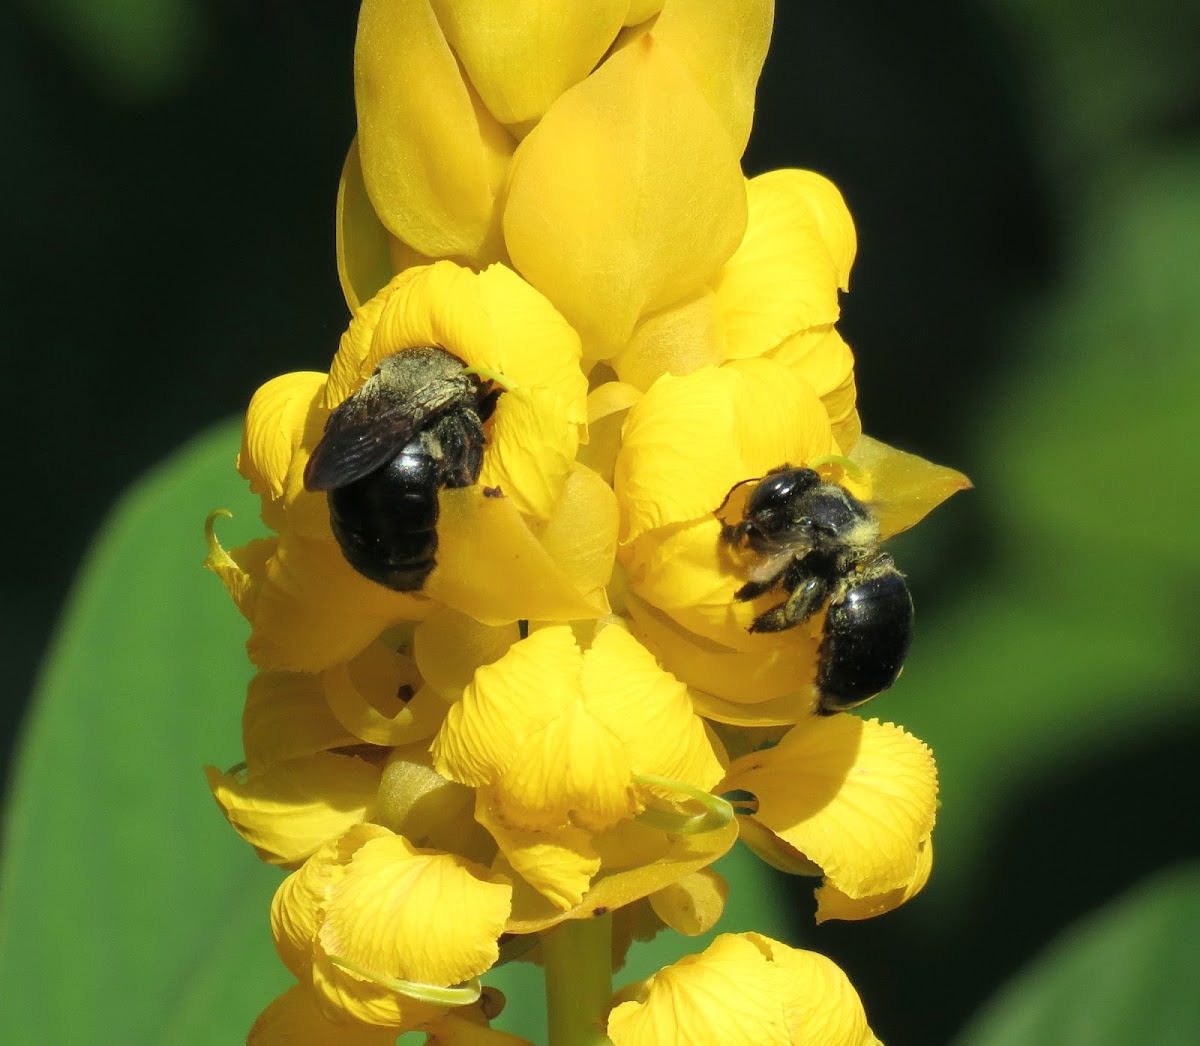 Carpentar bees